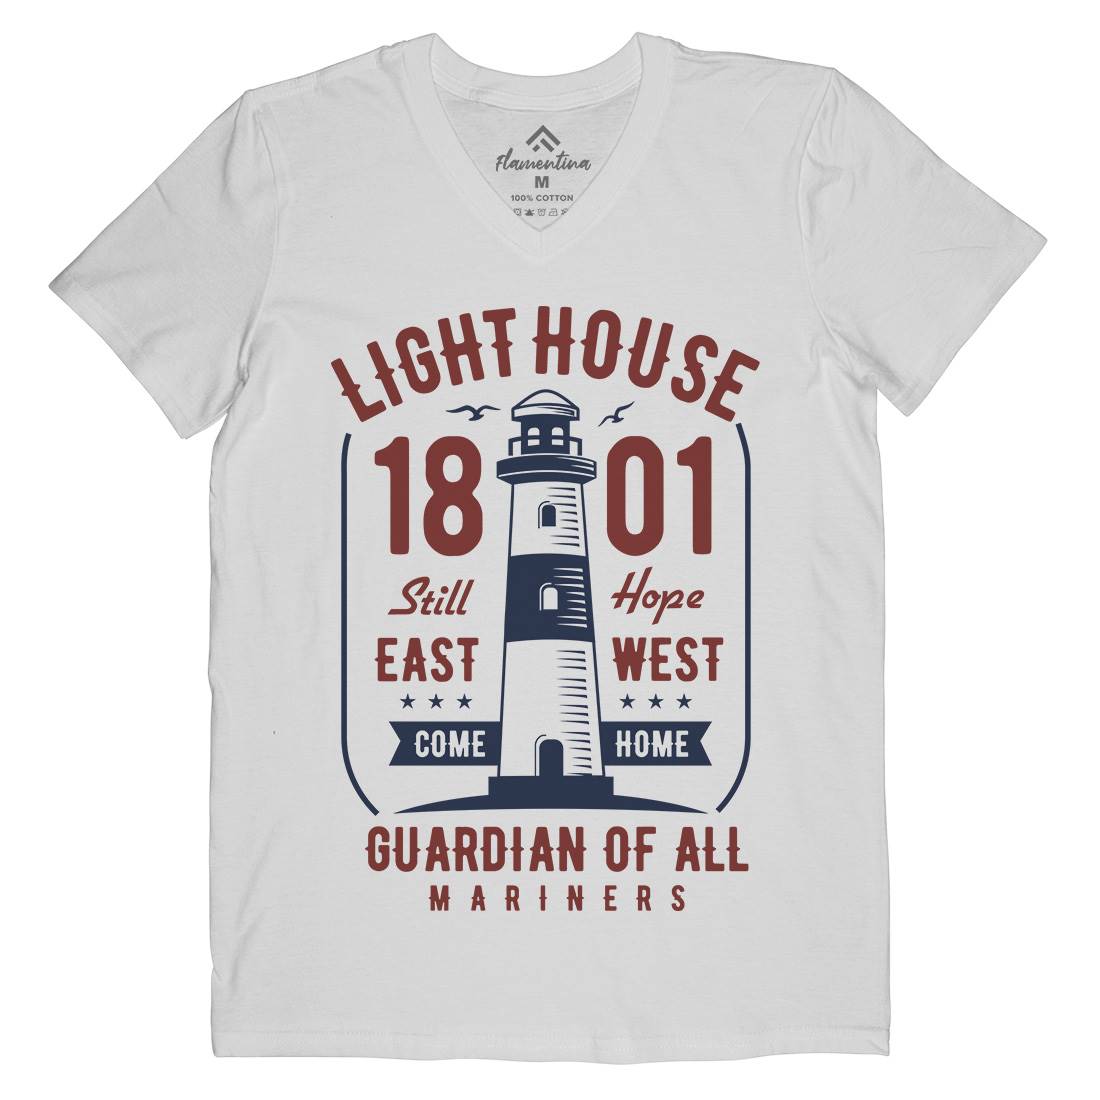 Light House Mens Organic V-Neck T-Shirt Navy B418